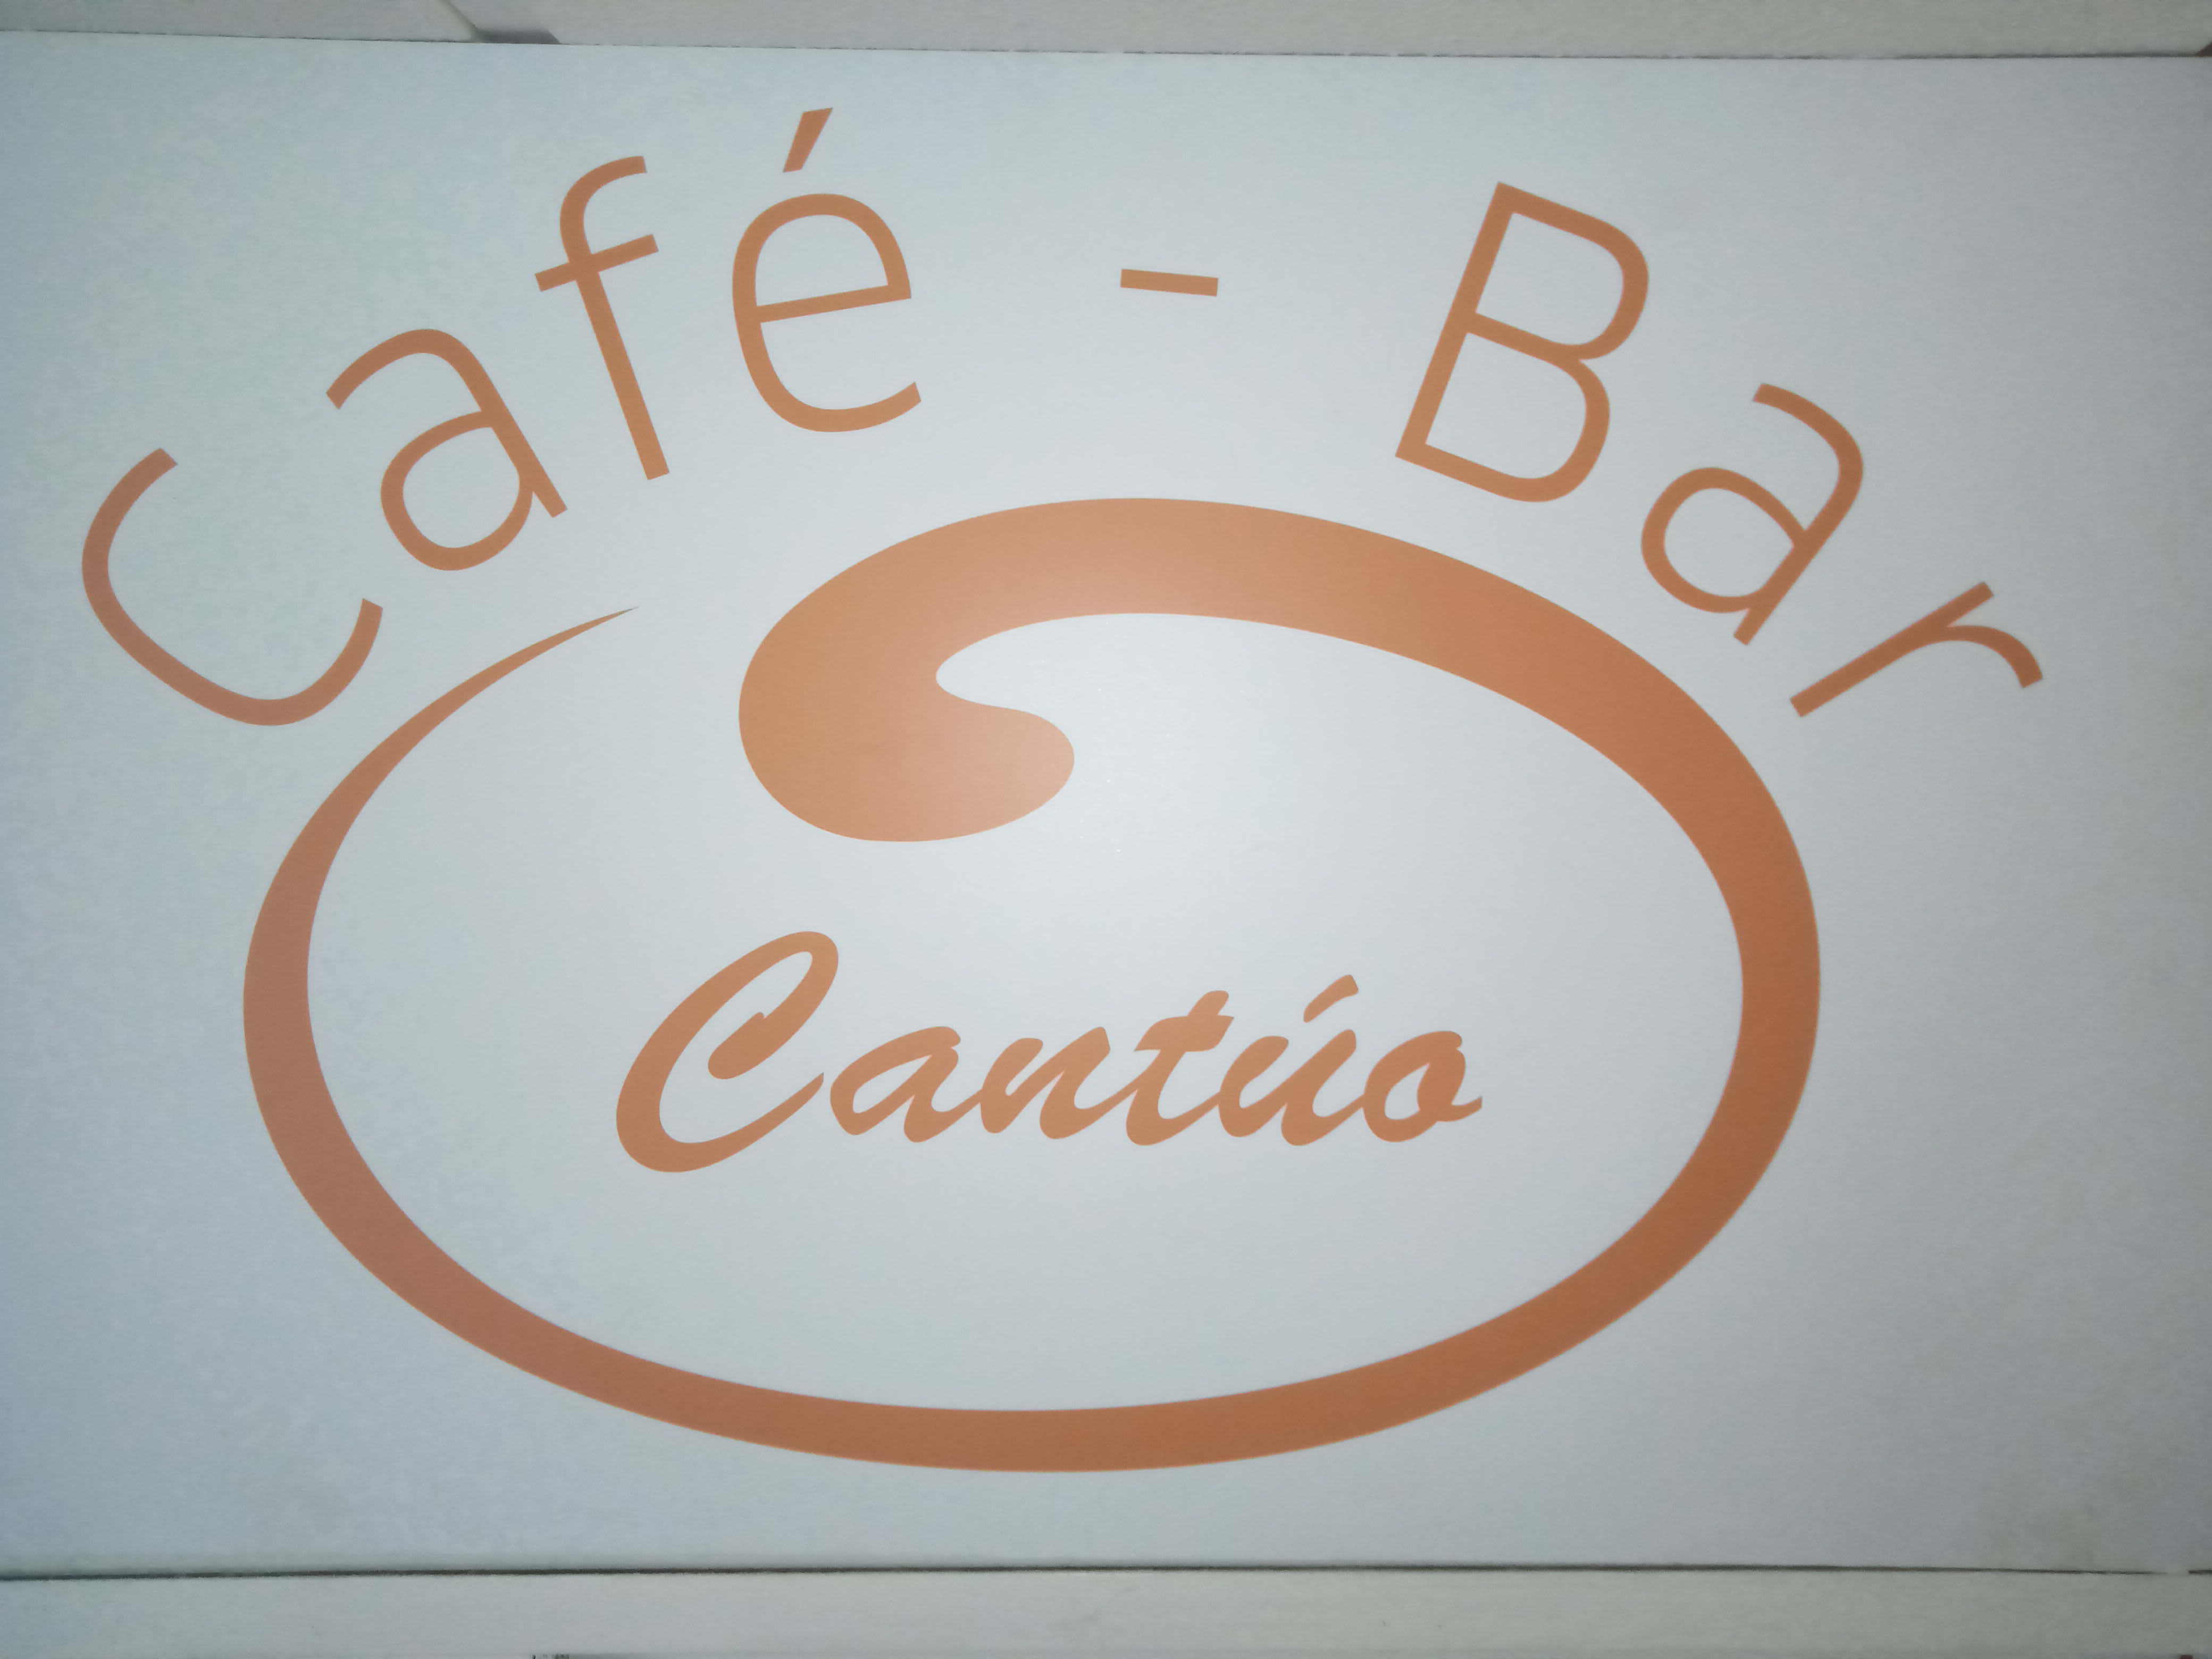 Café-Bar Cantúo